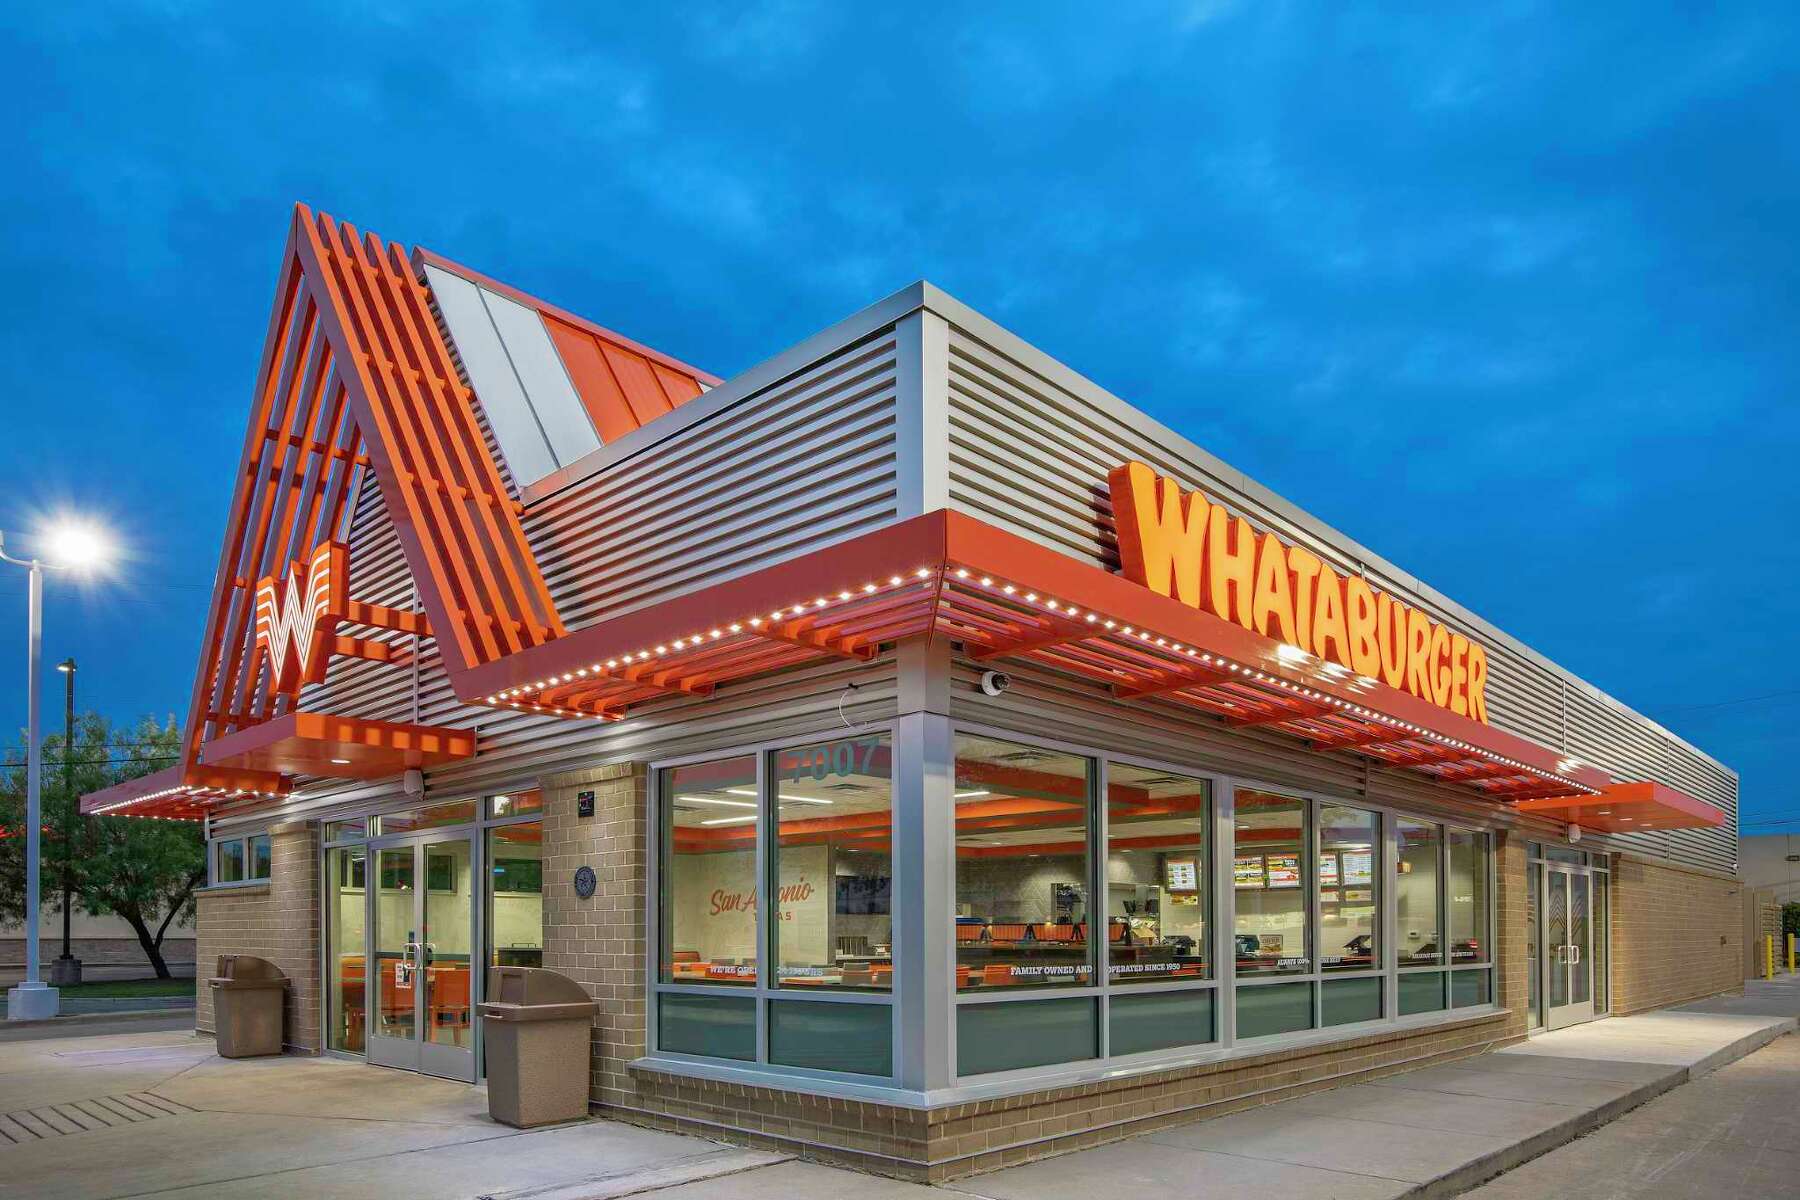 San Antonio burger haven Papa's to open new location on West Side, San  Antonio